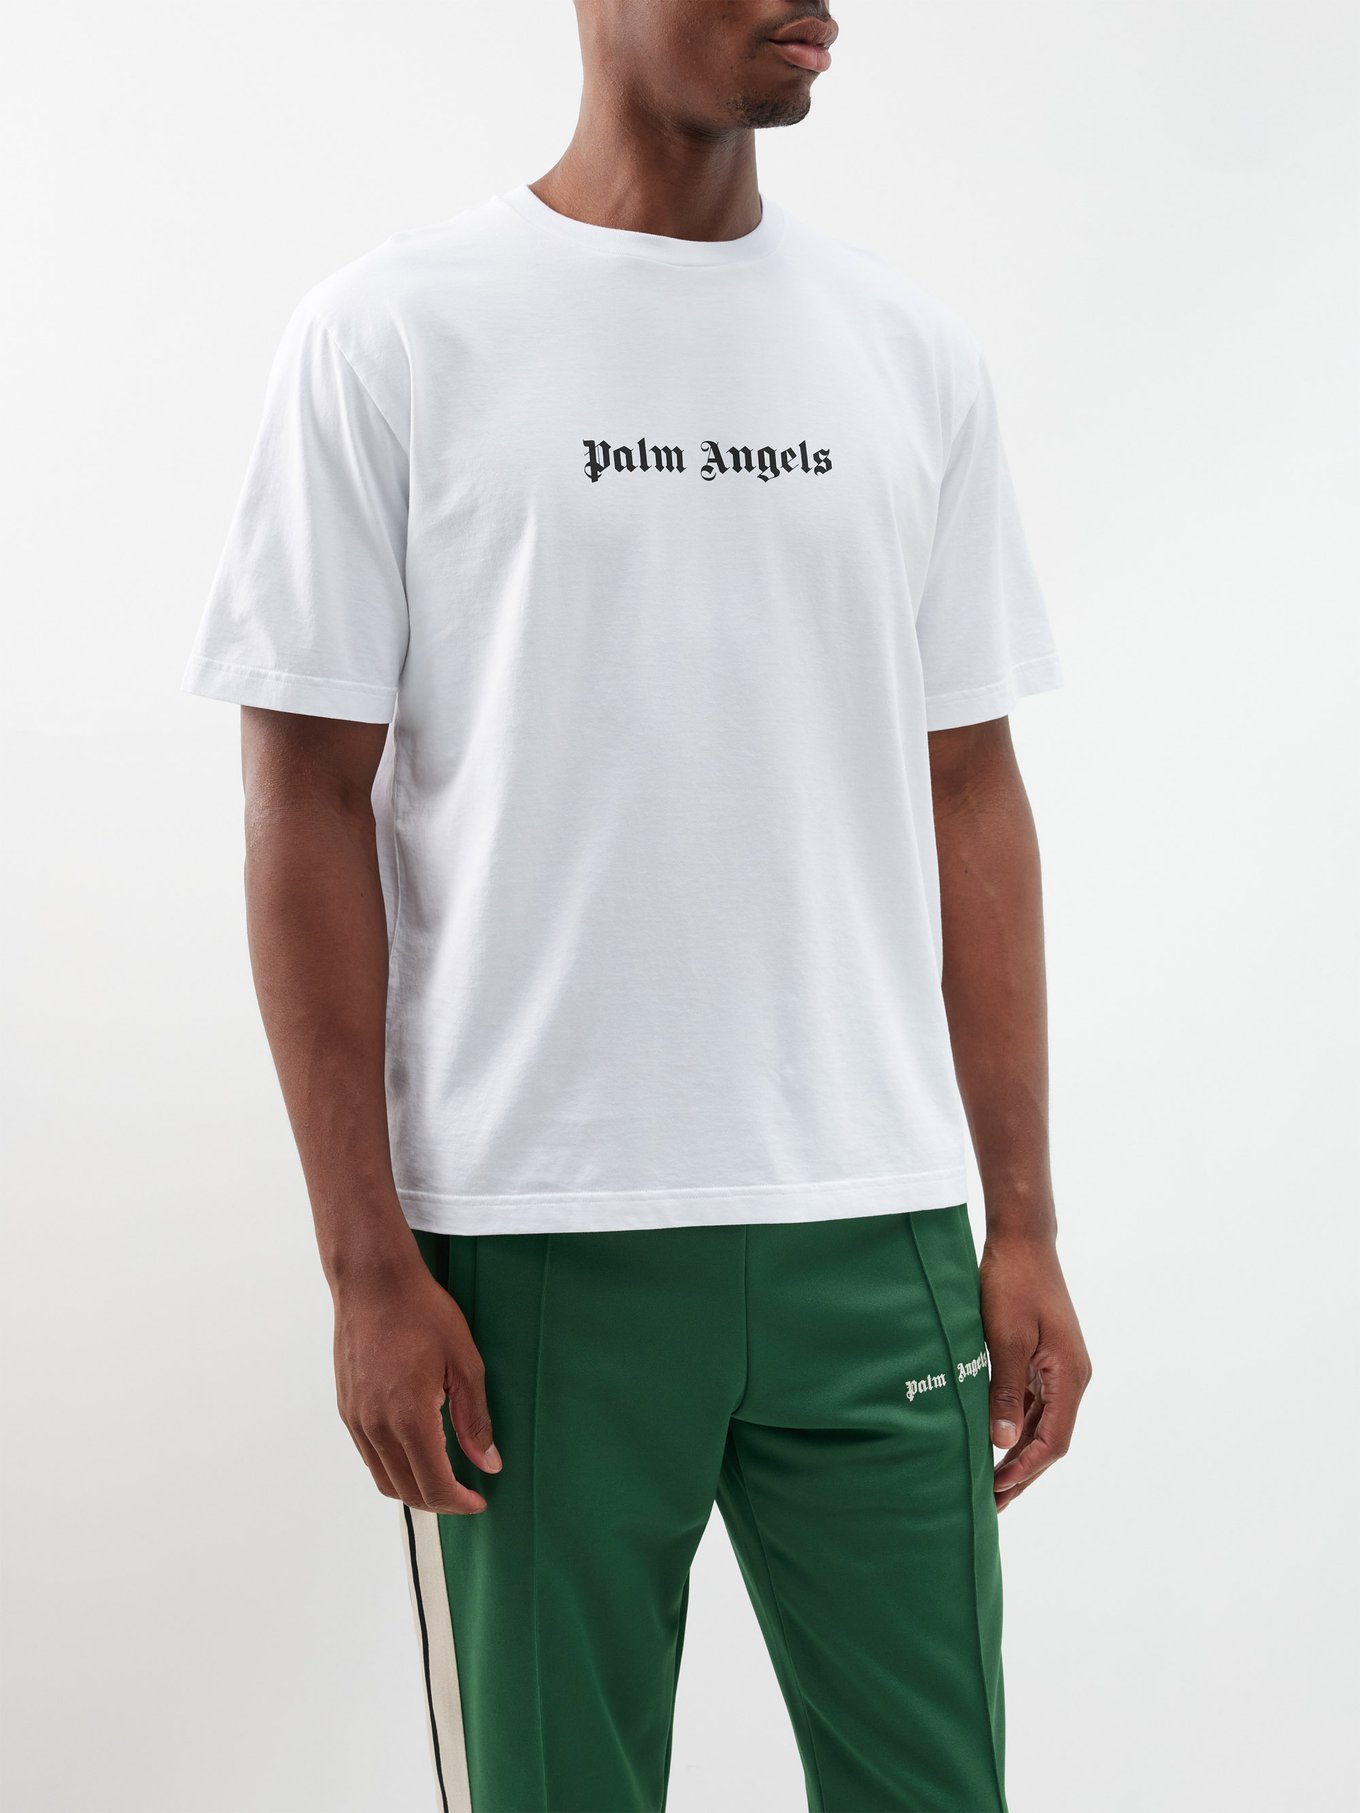 Palm Angels Logo Collar Back Crew Neck Black Oversize T-shirt 